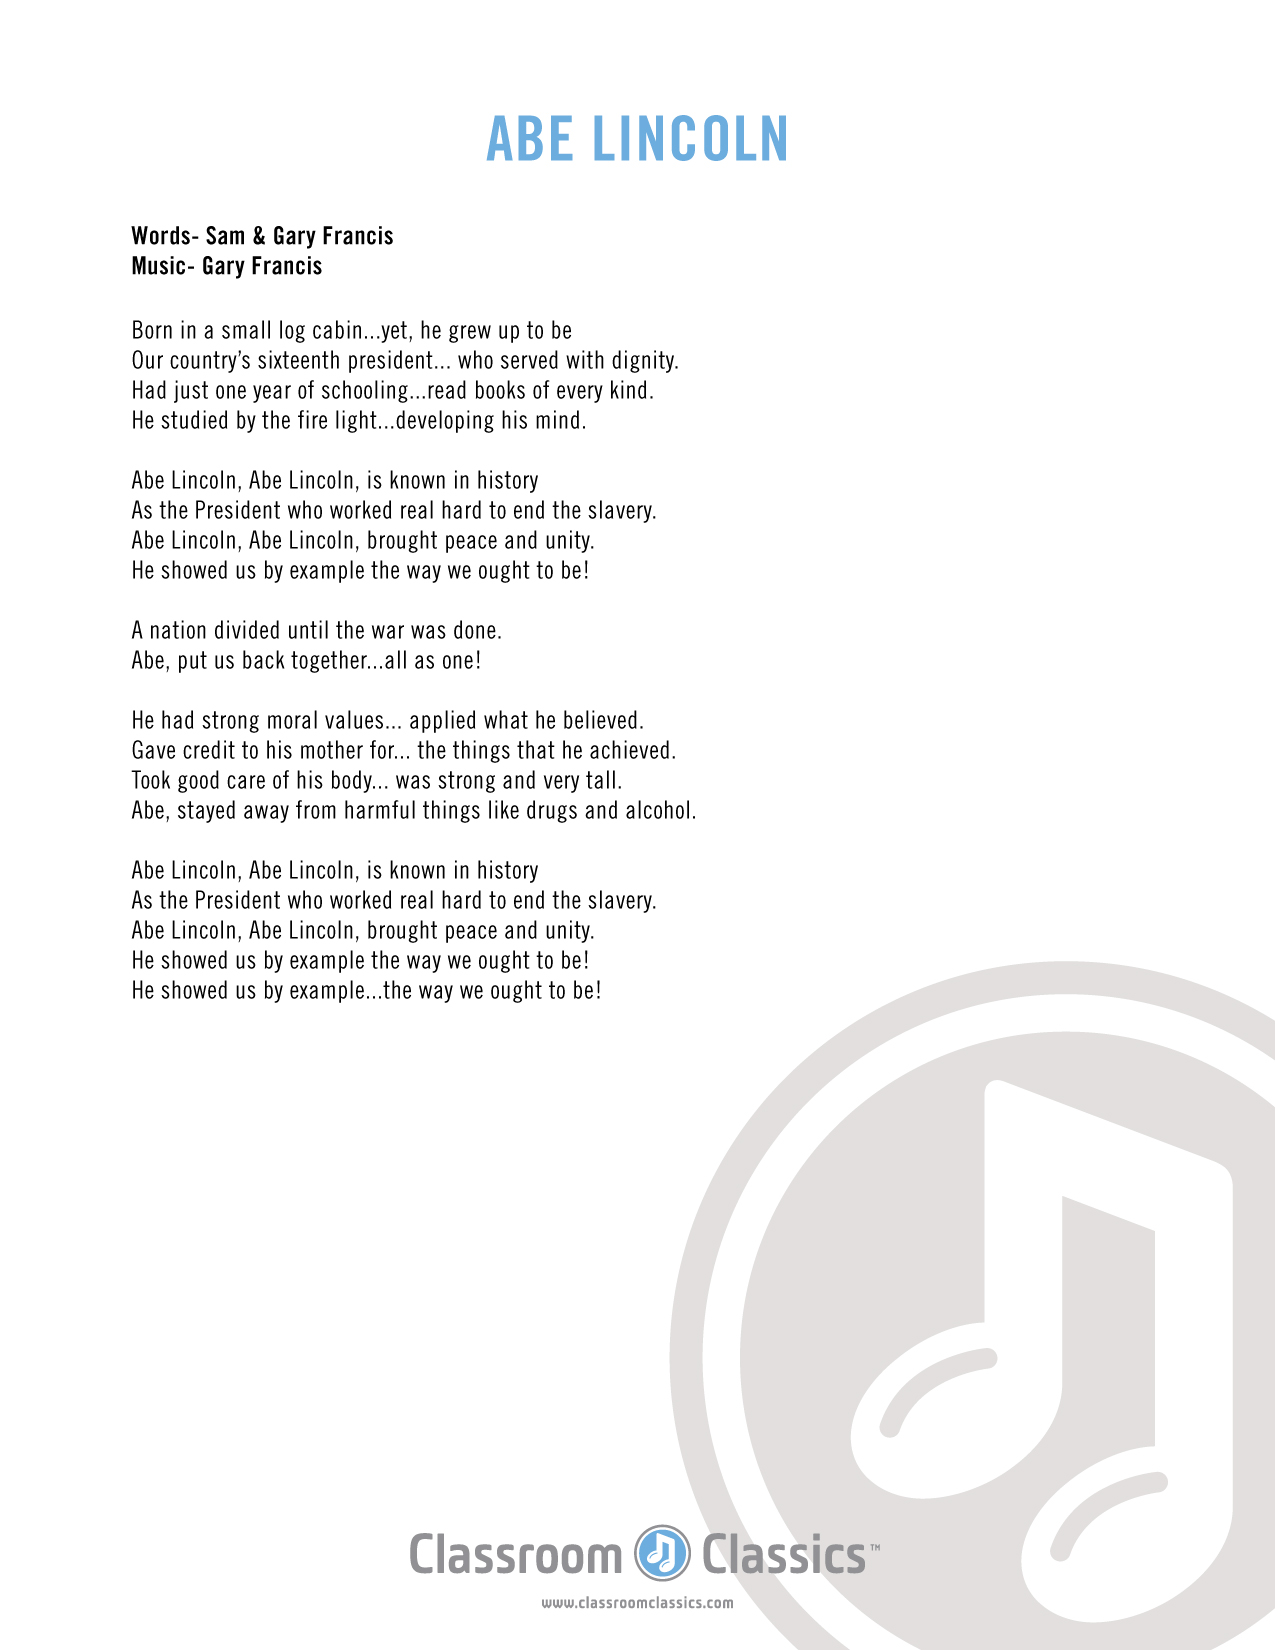 Asdasd - song and lyrics by LMBECIL